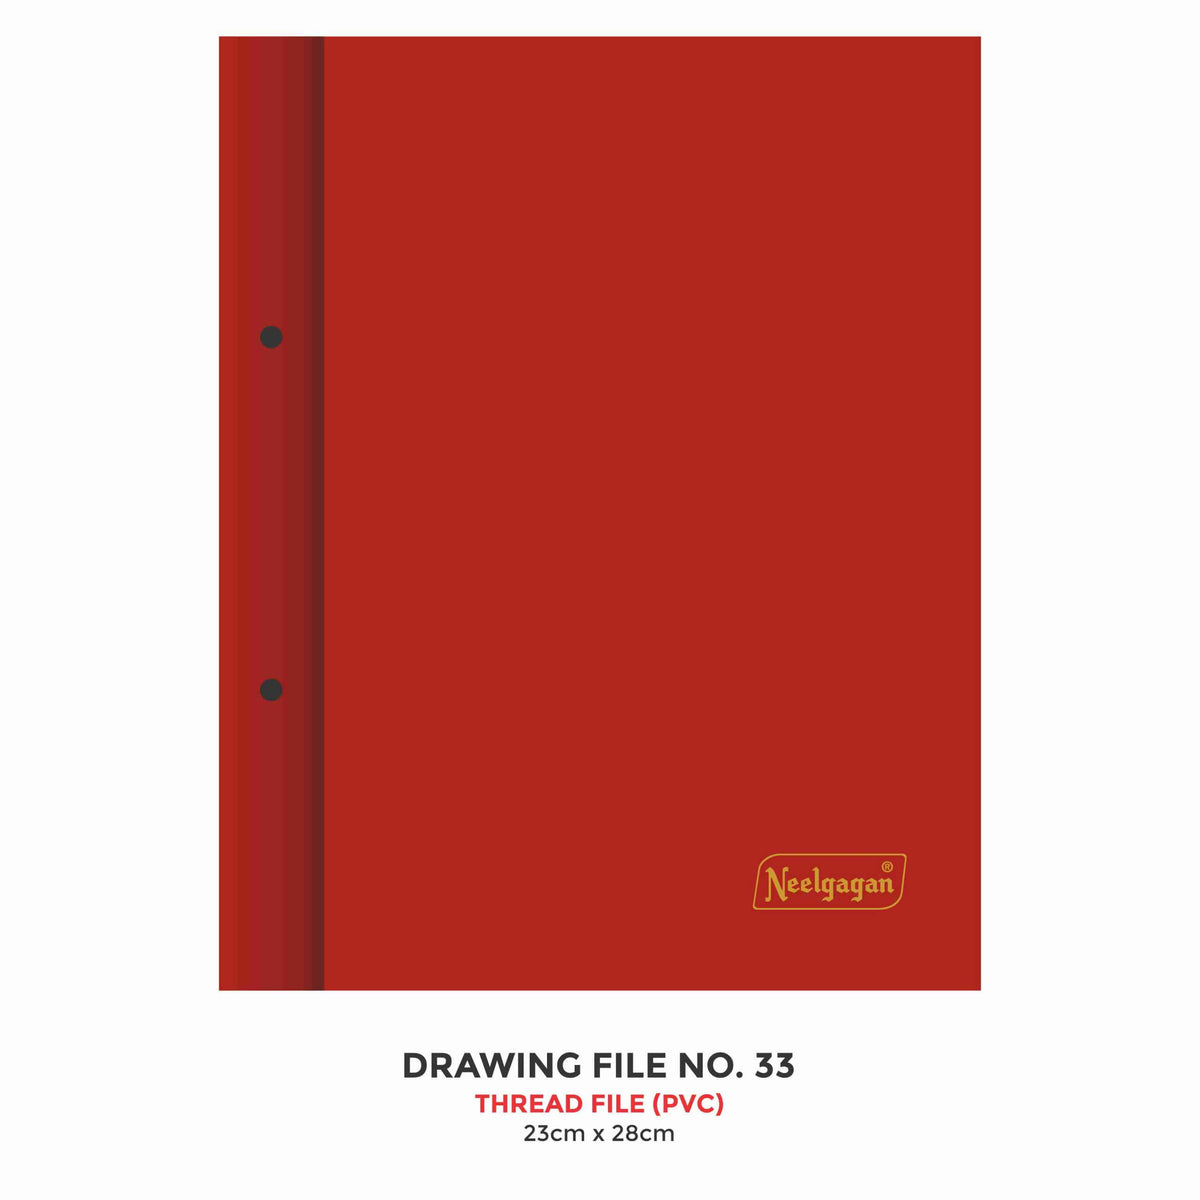 Drawing File No.33, (23cm X 28cm), (Thread File) PVC Cover